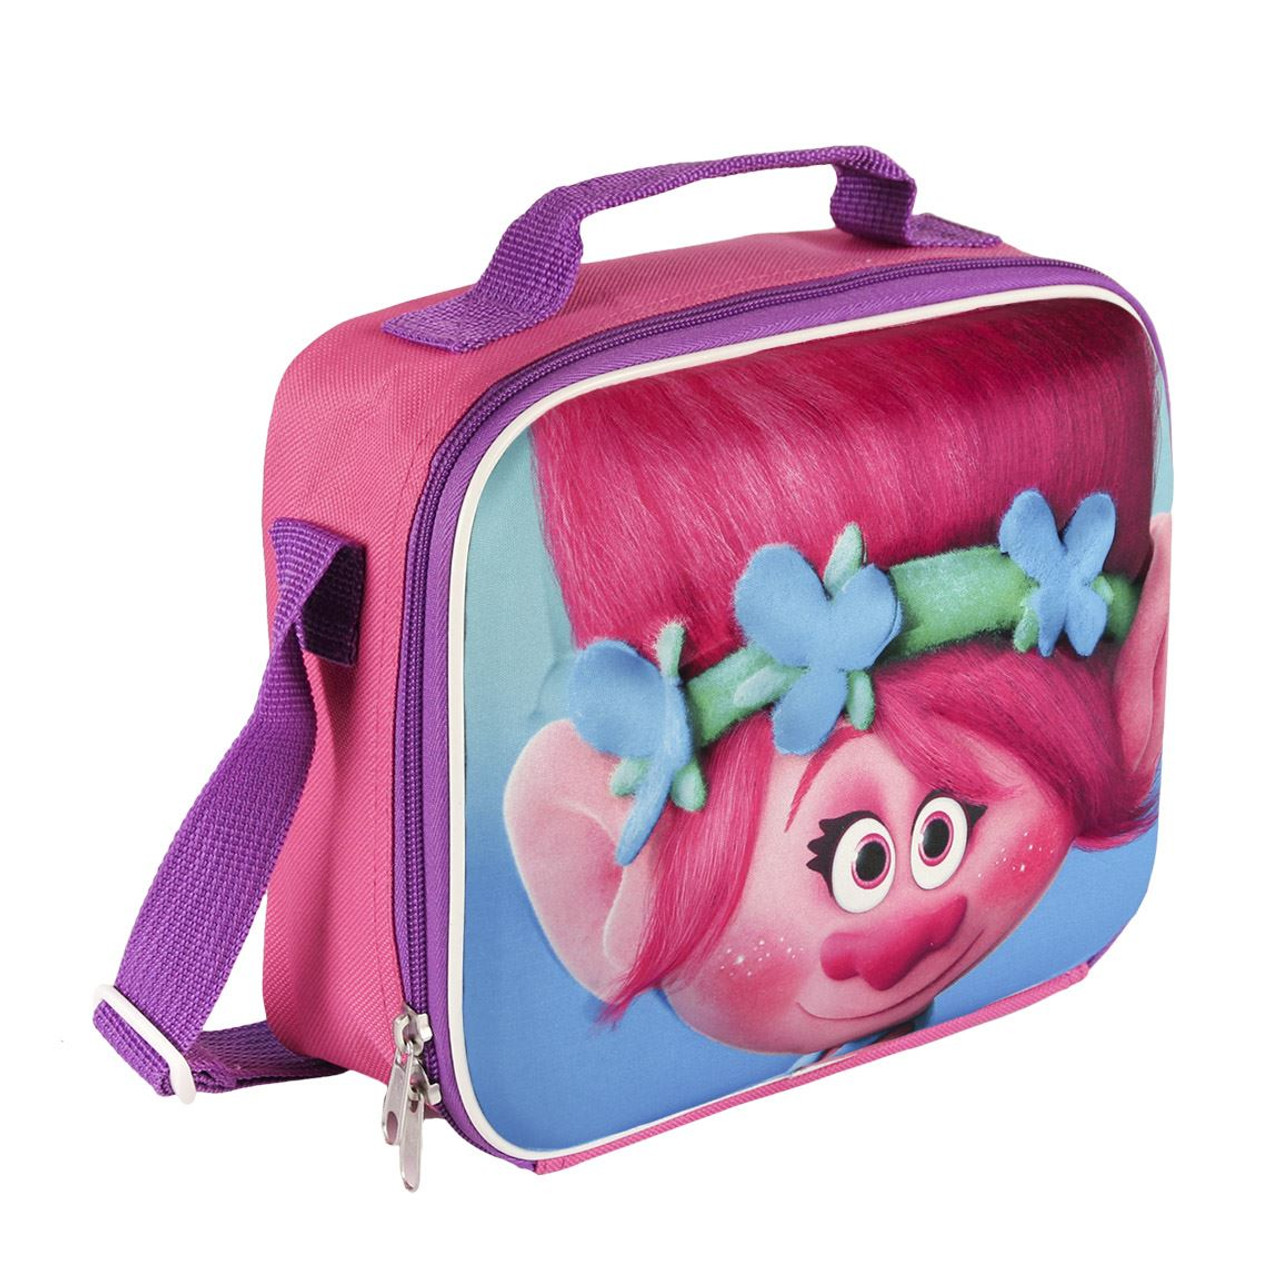 Dreamworks Trolls Insulated Lunch Bag - Lunch Box - Poppy's Fun Day